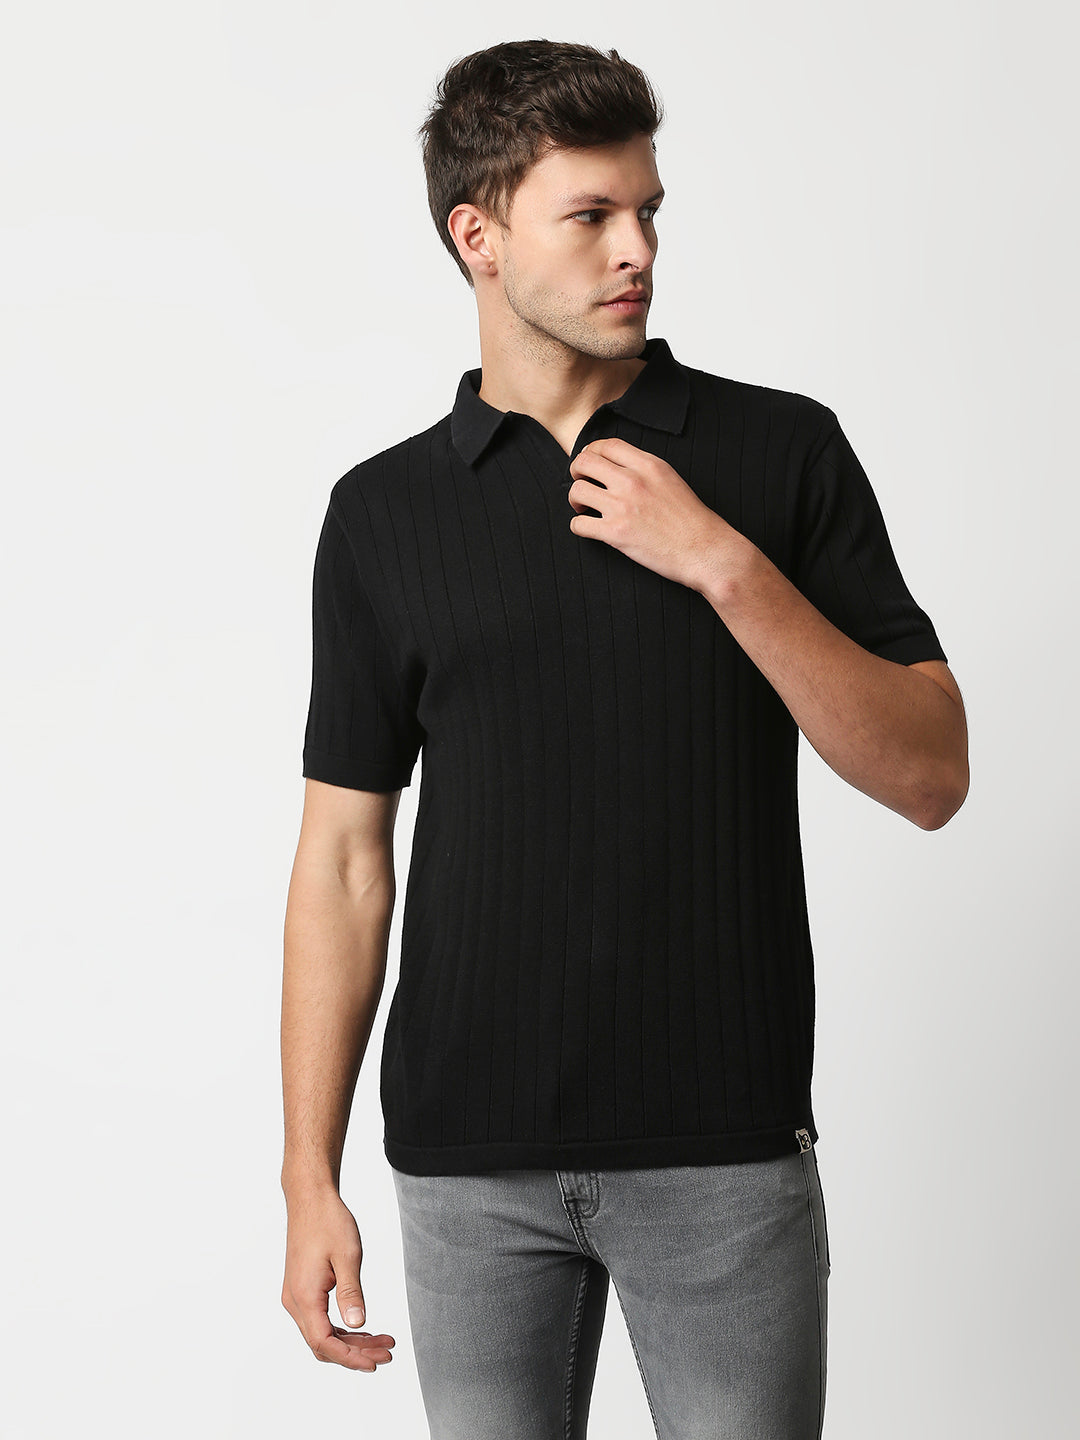 Buy Blamblack Men's Collar Flat Knit Half Sleeves Black Color T Shirt